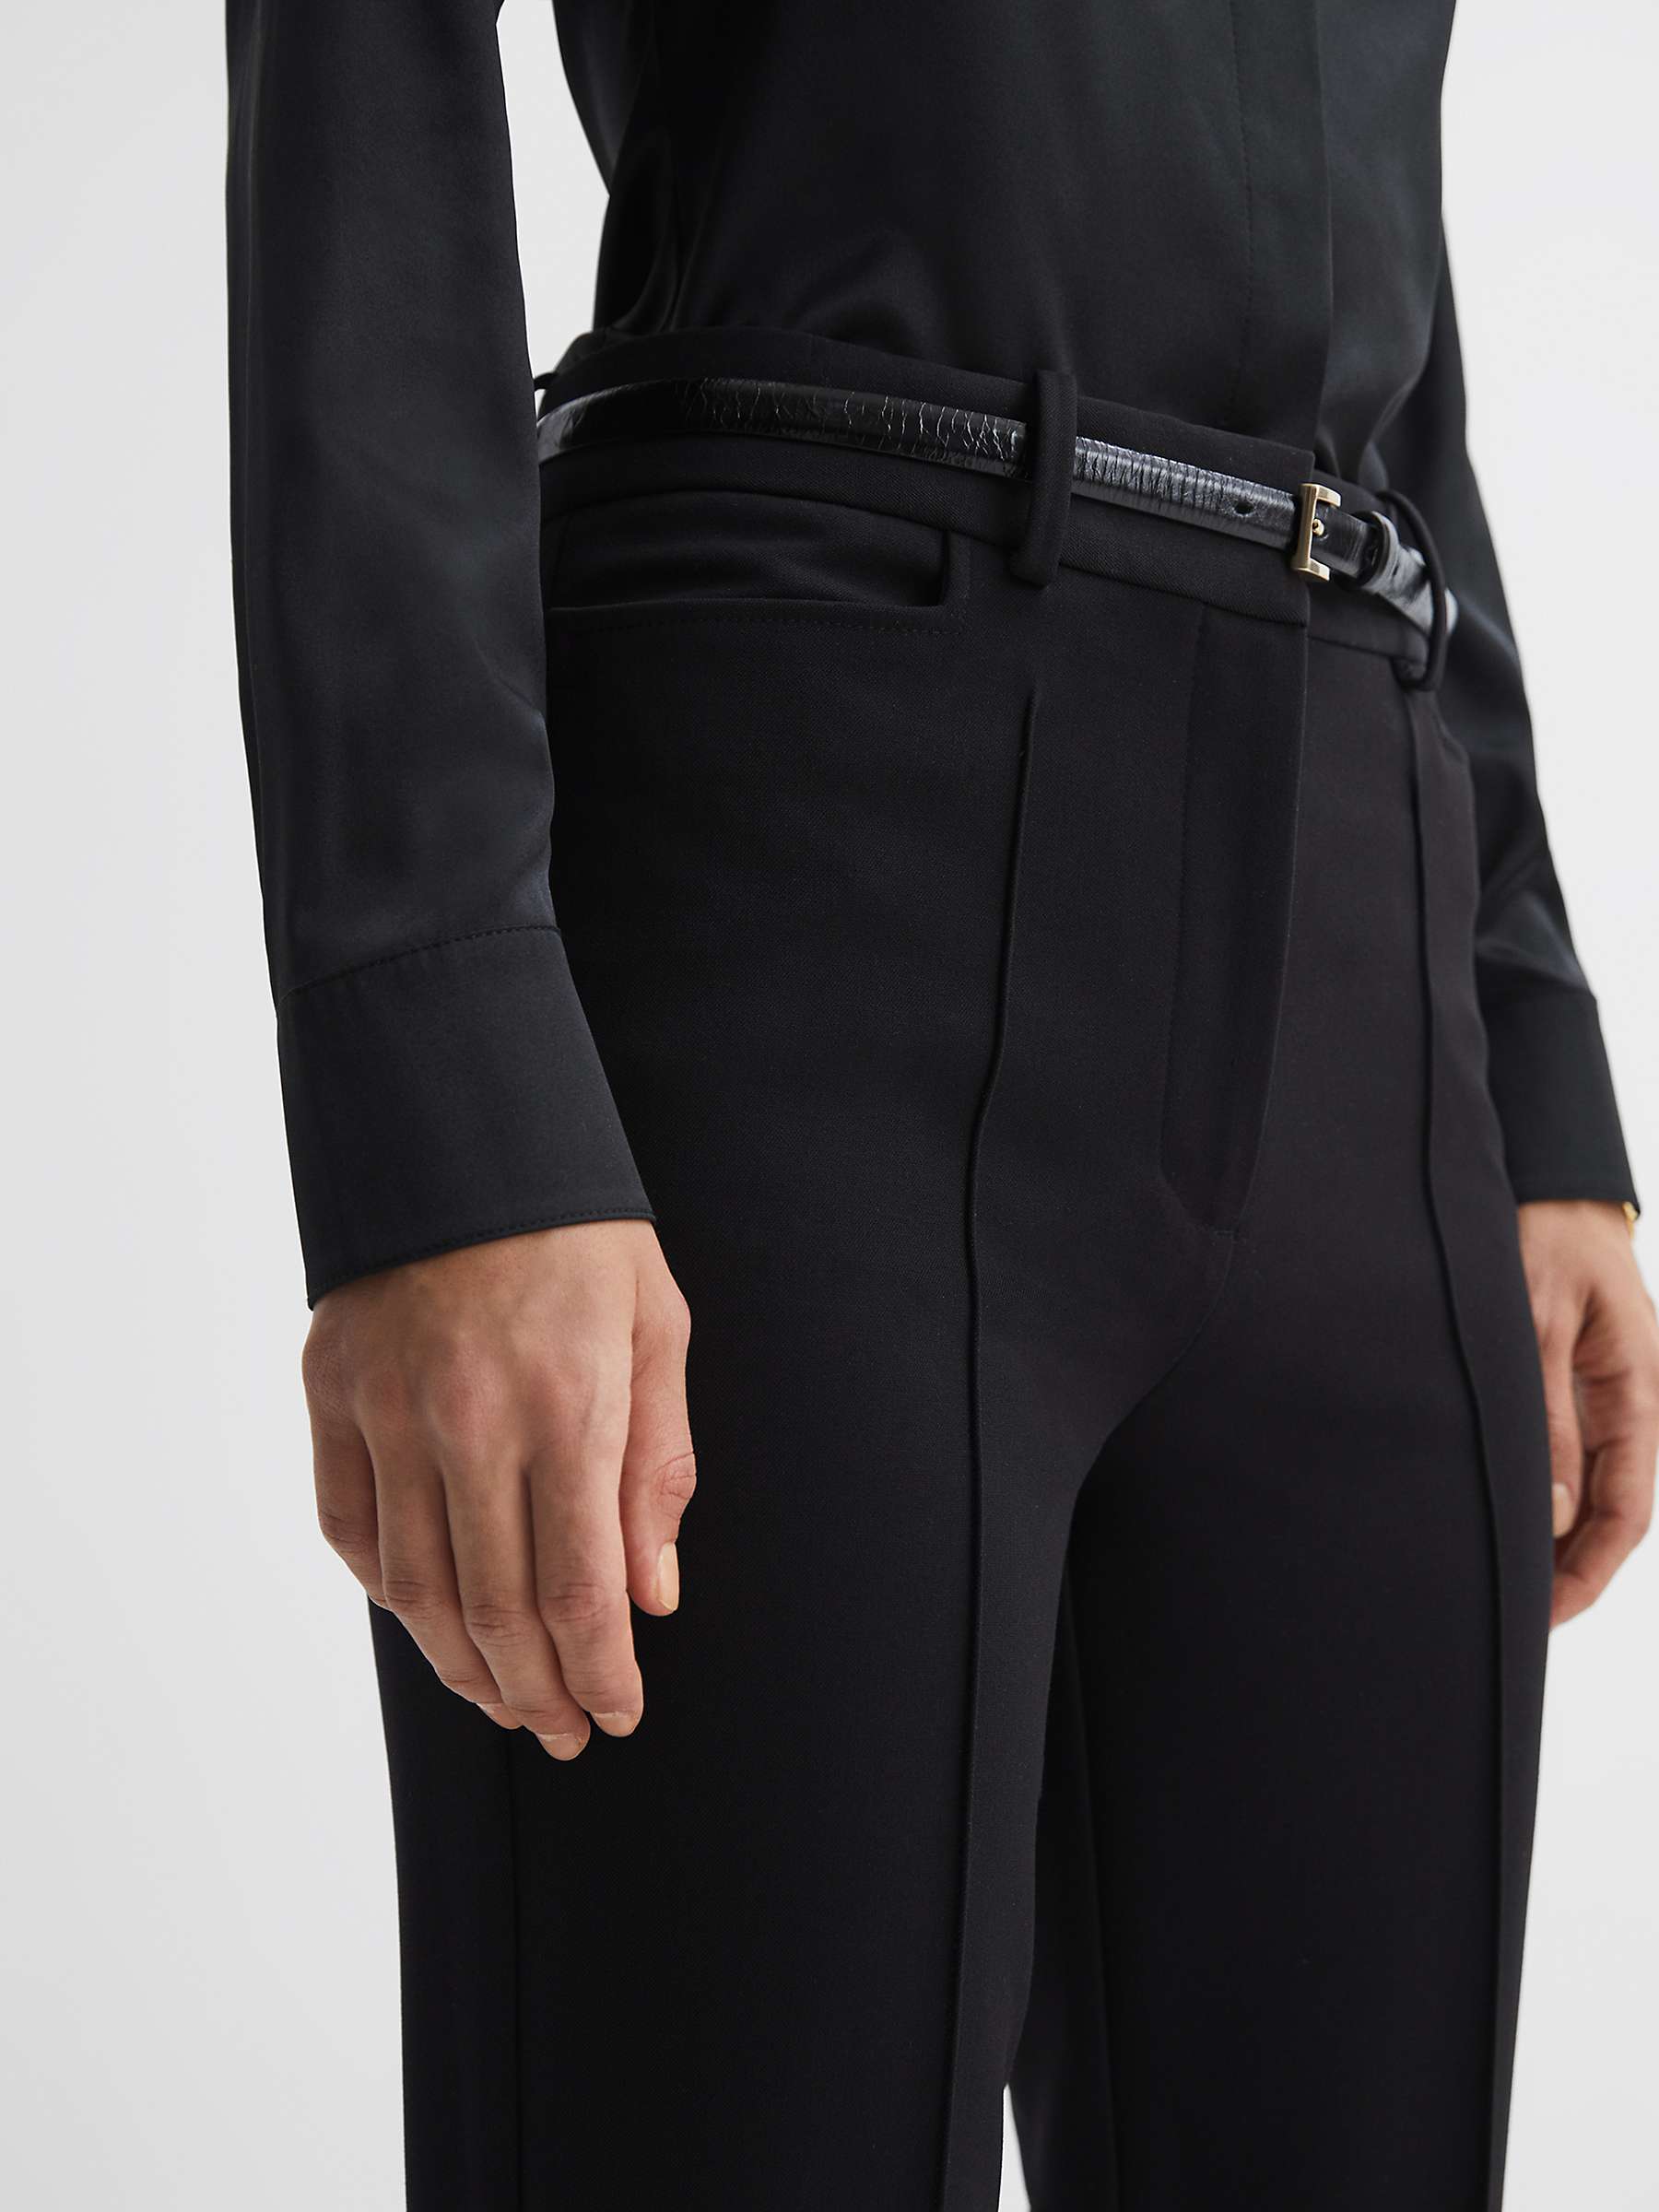 Buy Reiss Petite Gabi Flared Tailored Trousers, Black Online at johnlewis.com